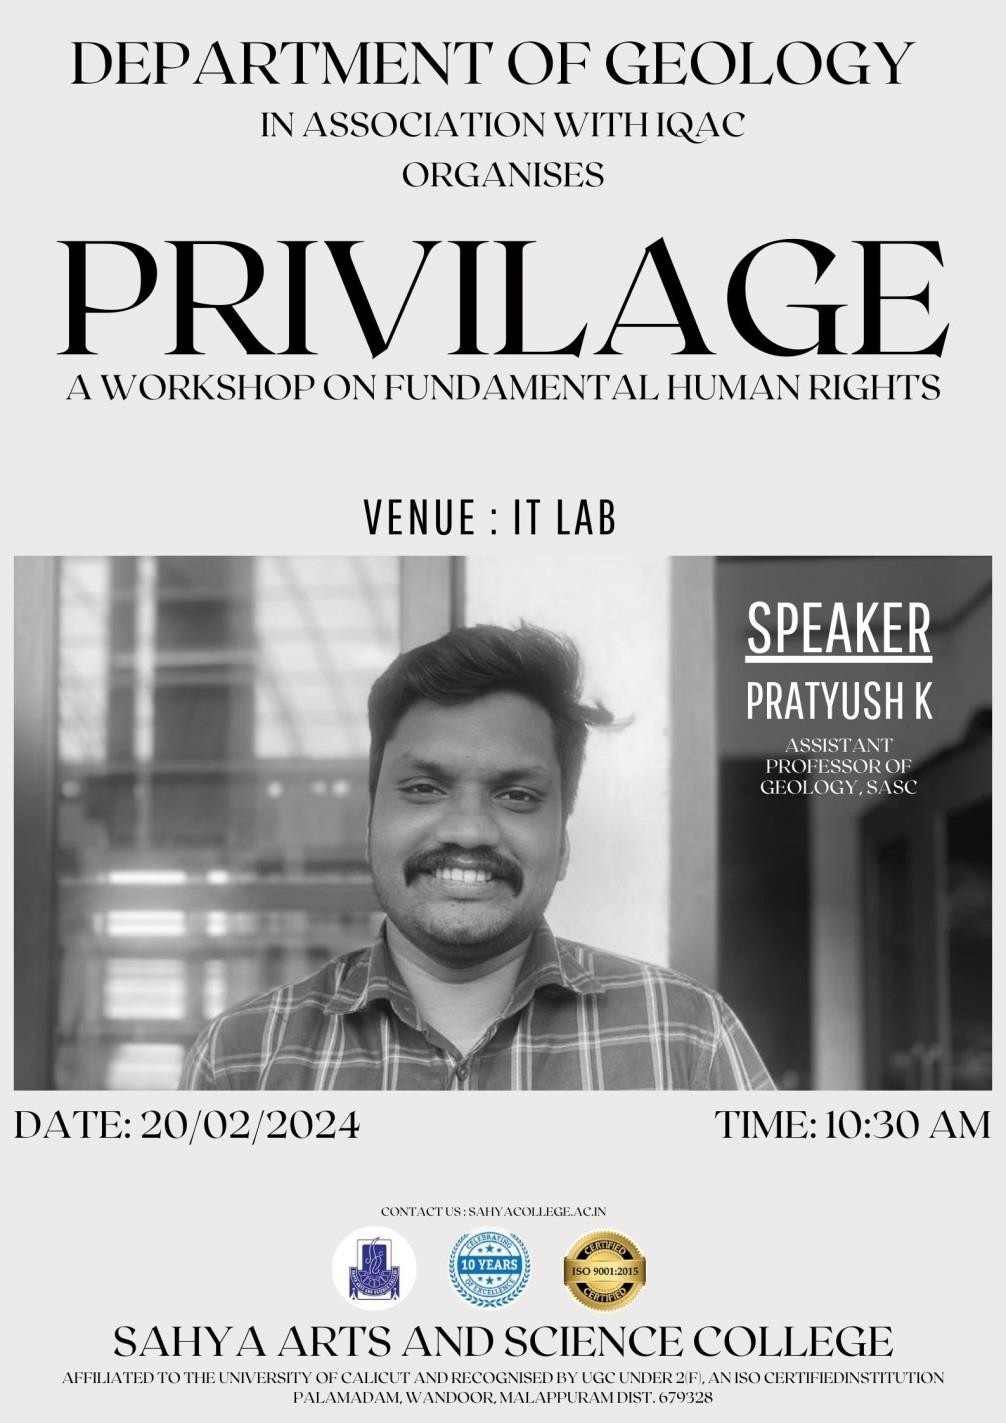 PRIVILAGE: A Workshop on Fundamental Human Rights